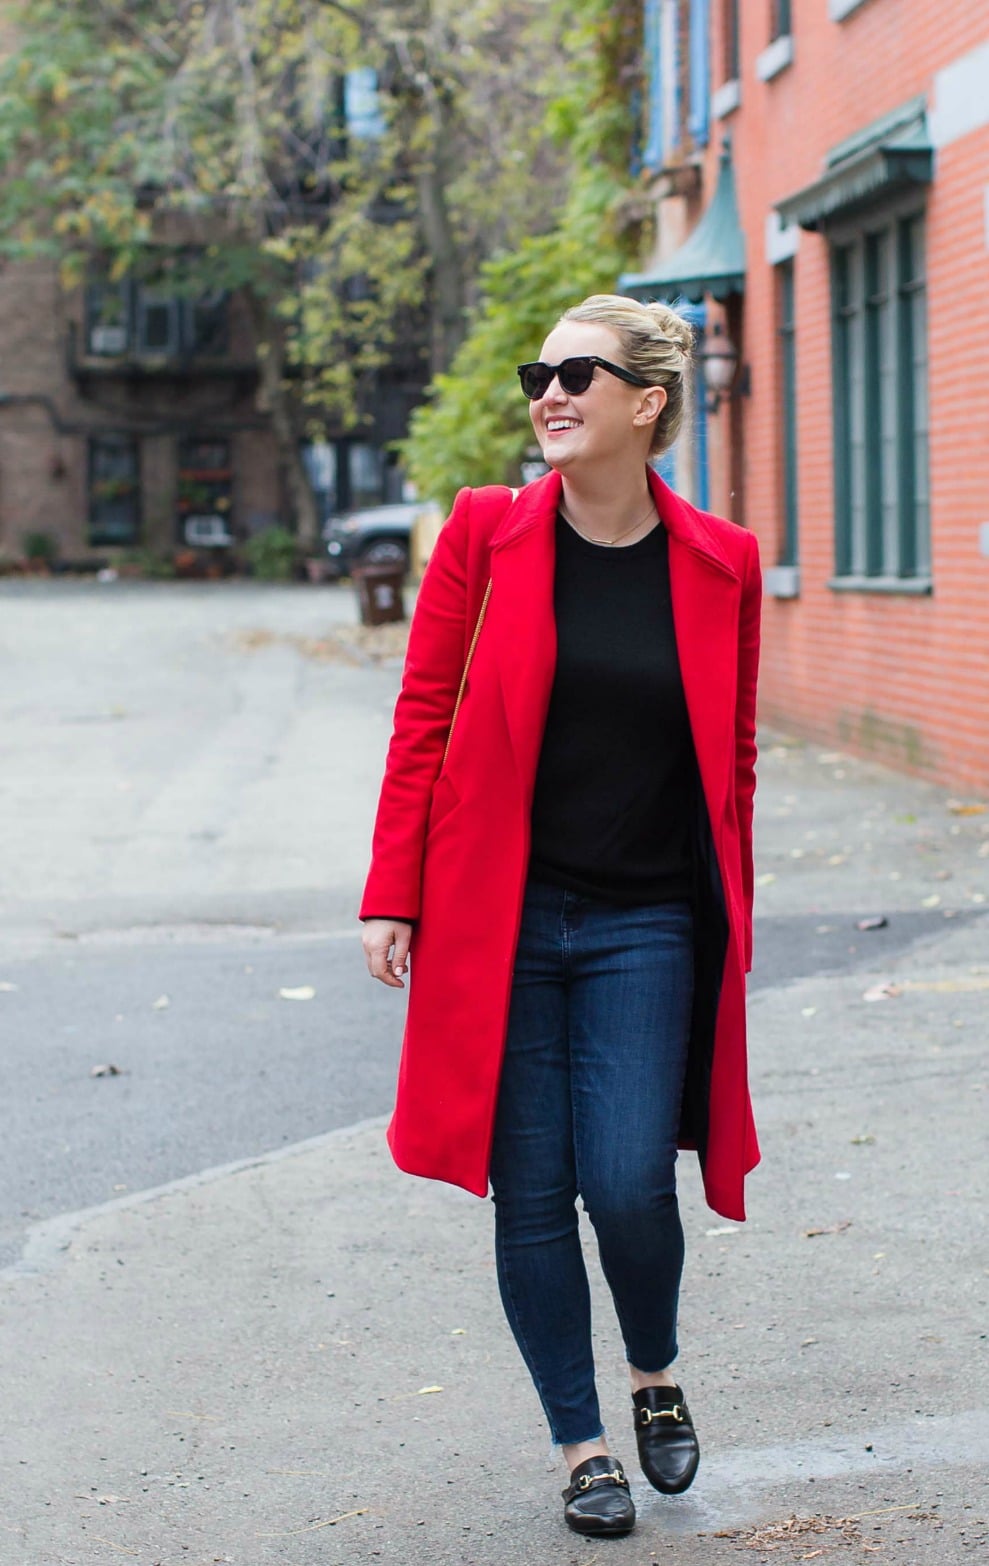 Meghan Donovan styles a red coat